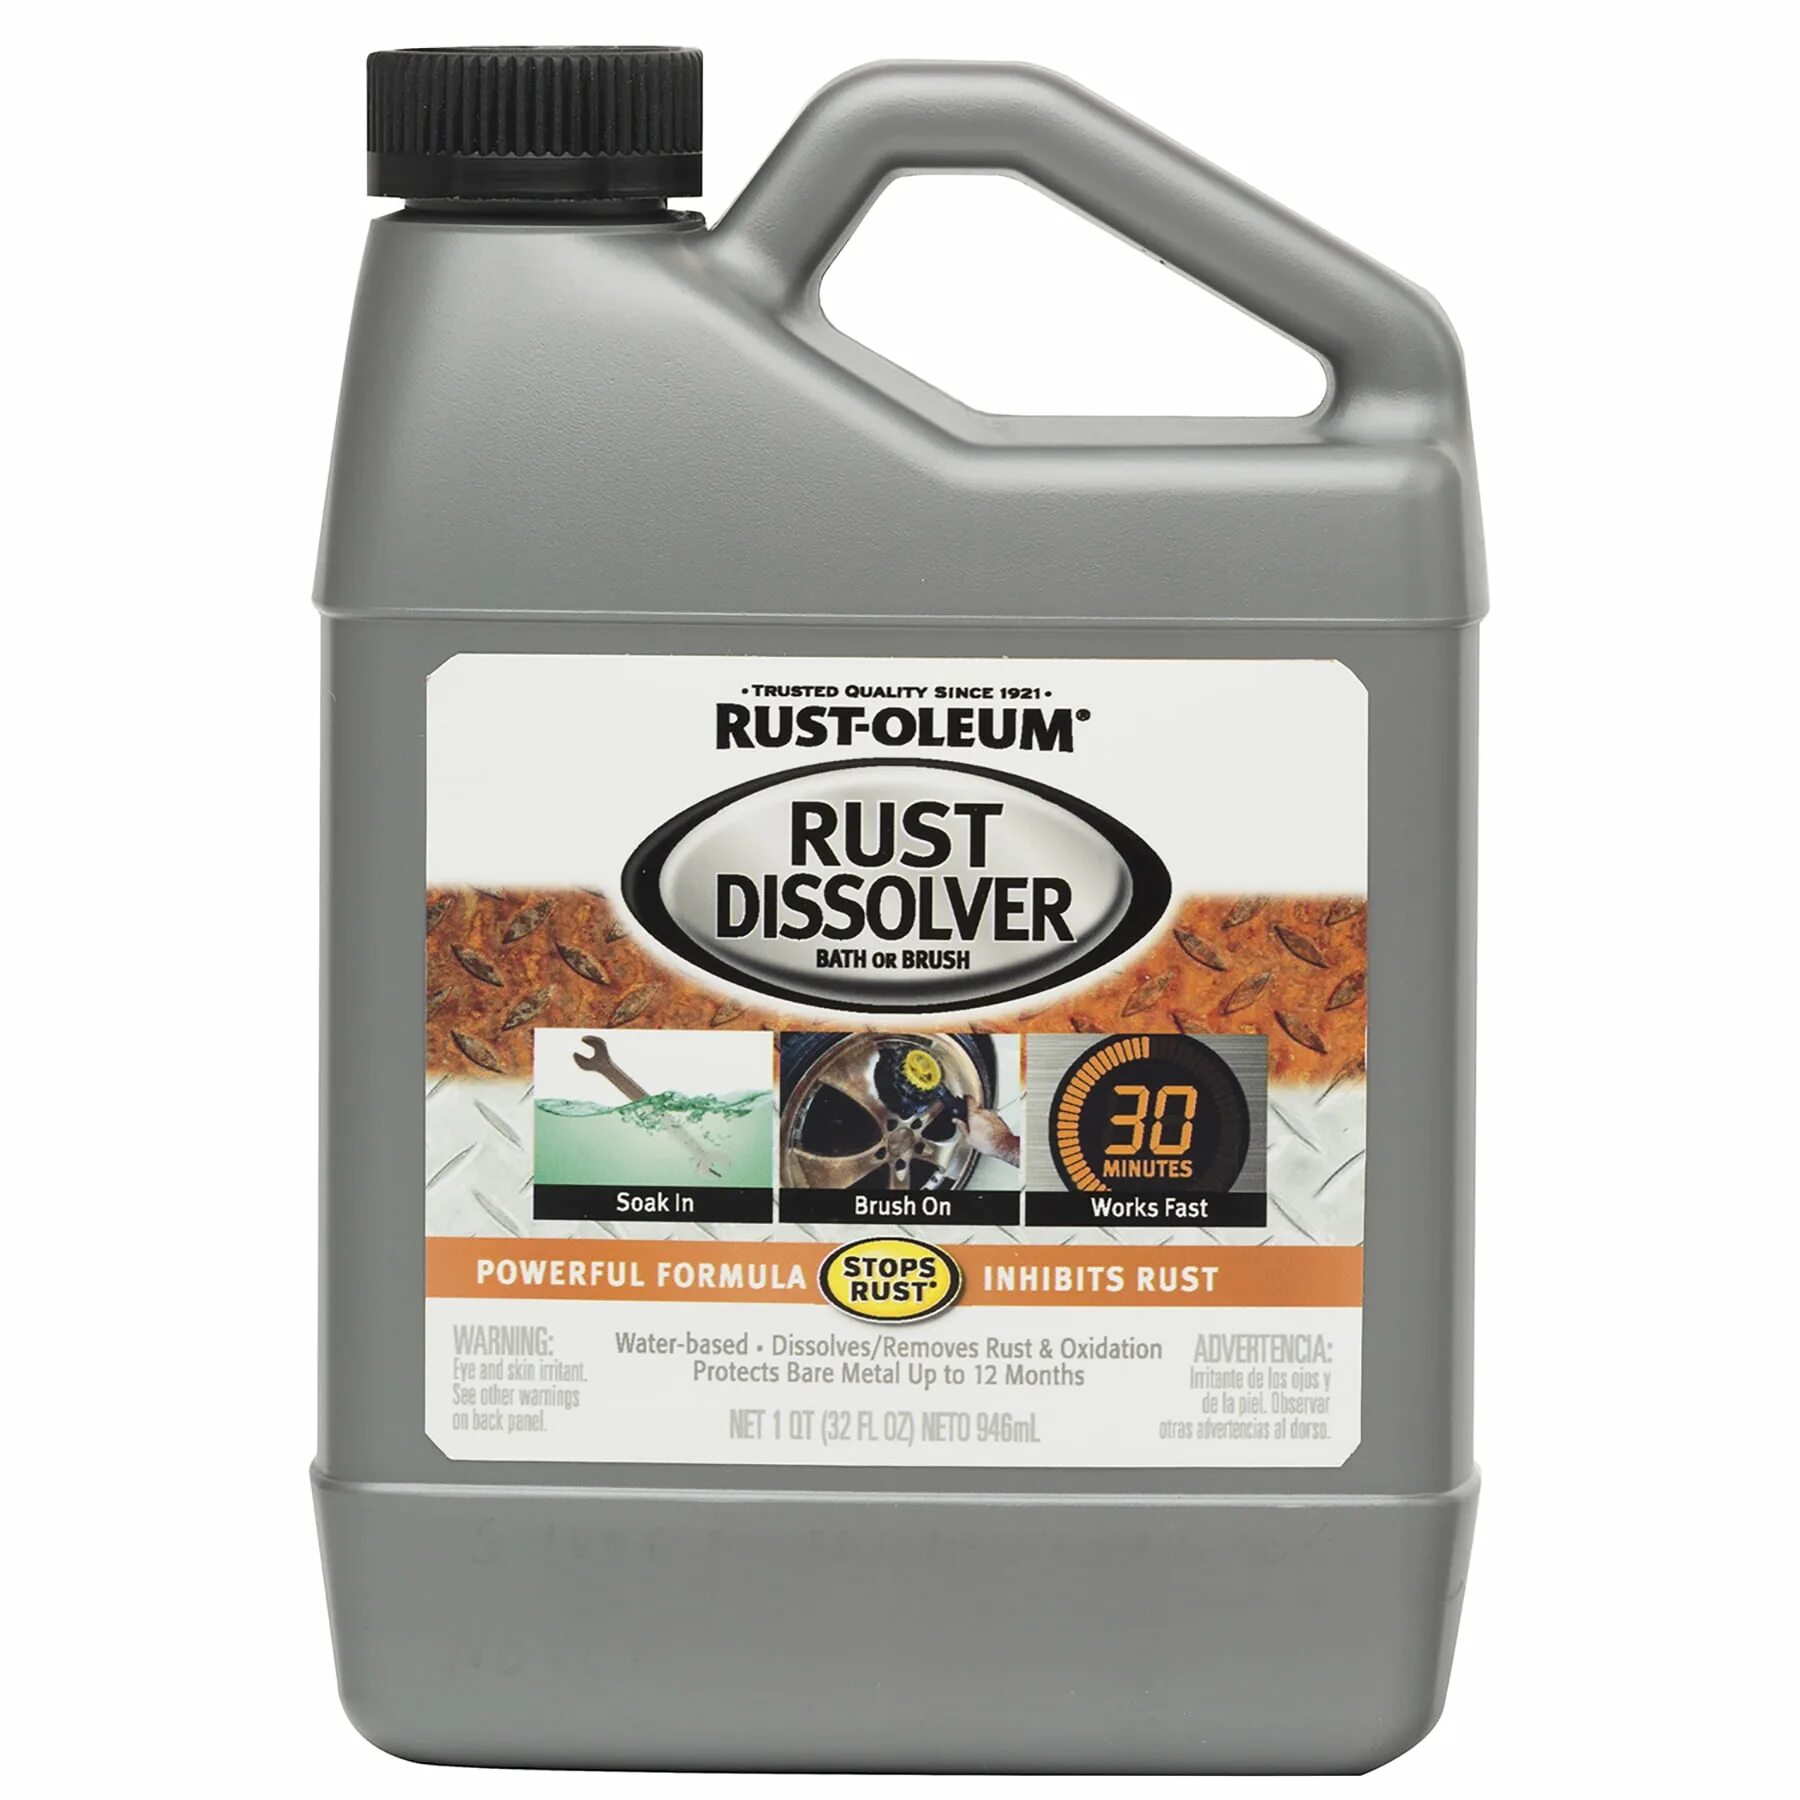 Rust цена. Rust Dissolver Spray. Преобразователь ржавчины Маннол 9932 Rust Dissolver 0.45л. Rust Automobile. Dissolver for Inks.